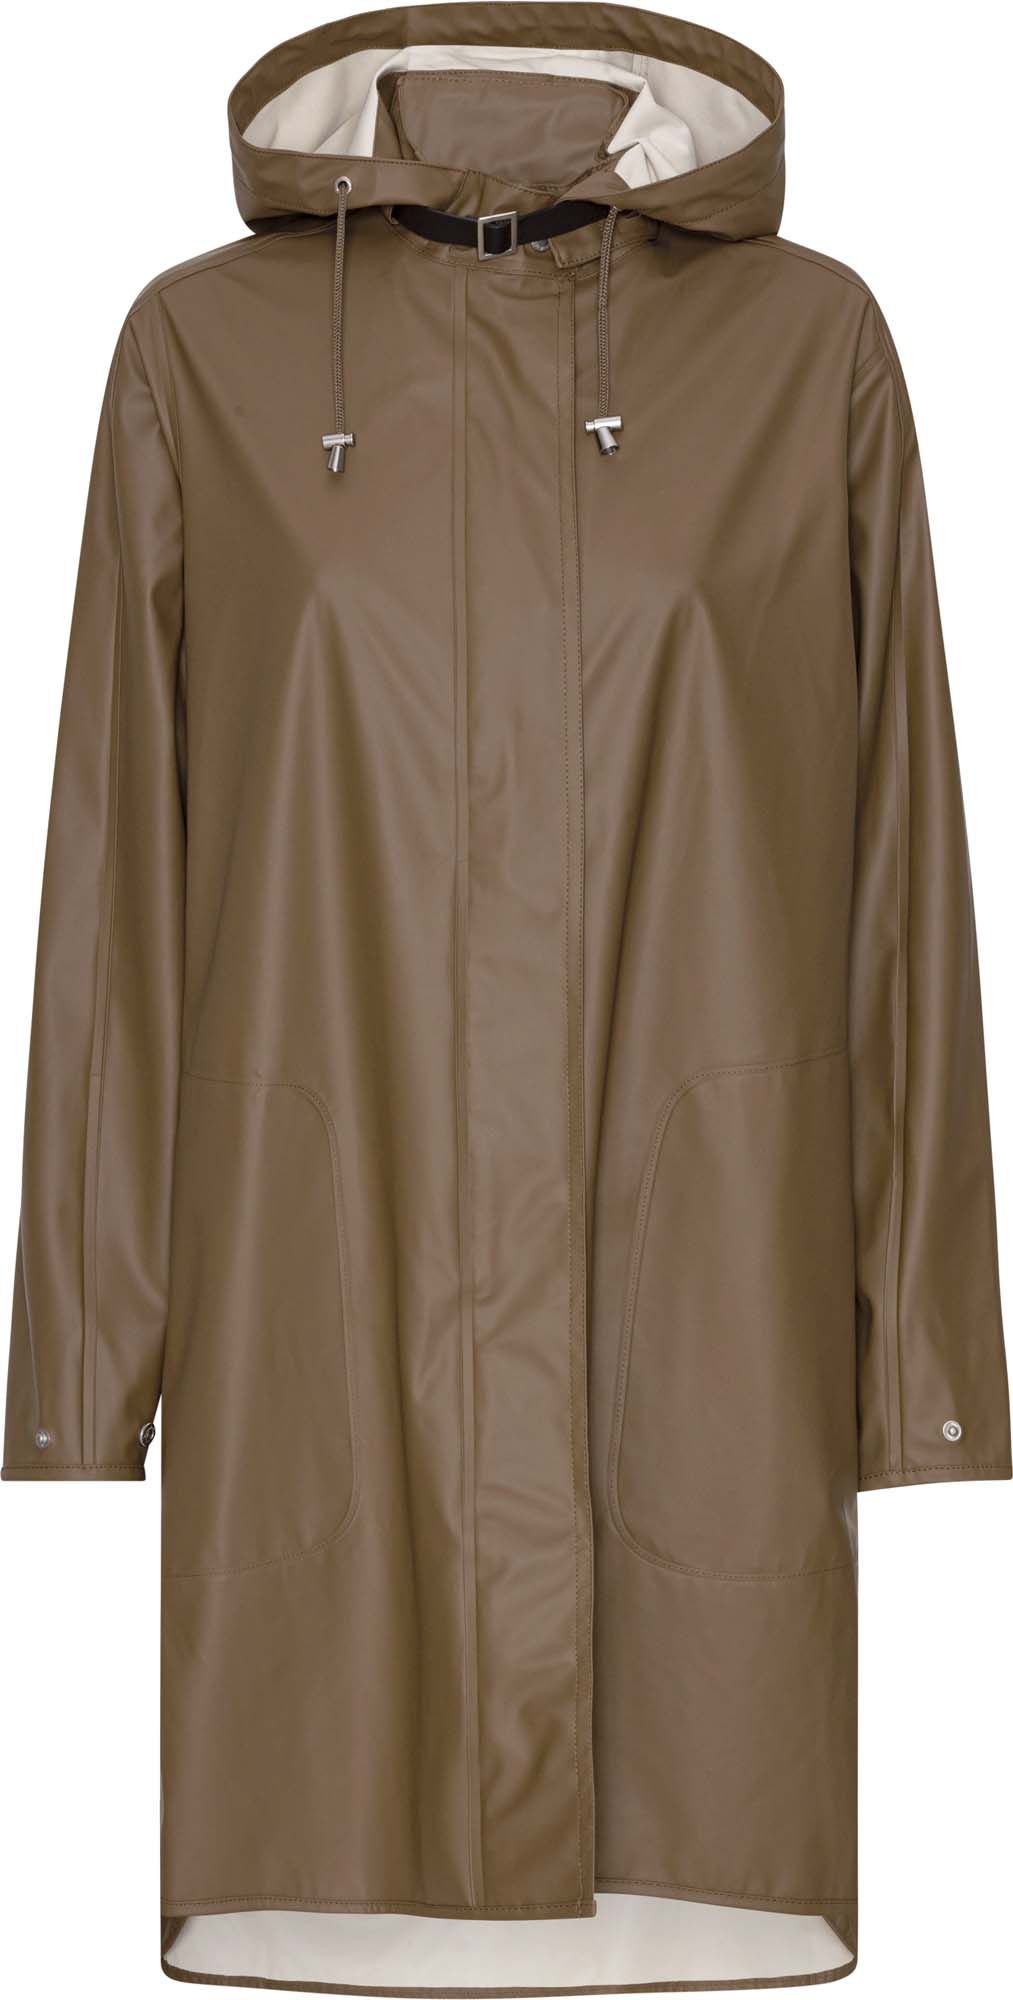 Ilse Jacobsen Women's Raincoat Detachable Hood Cub Brown